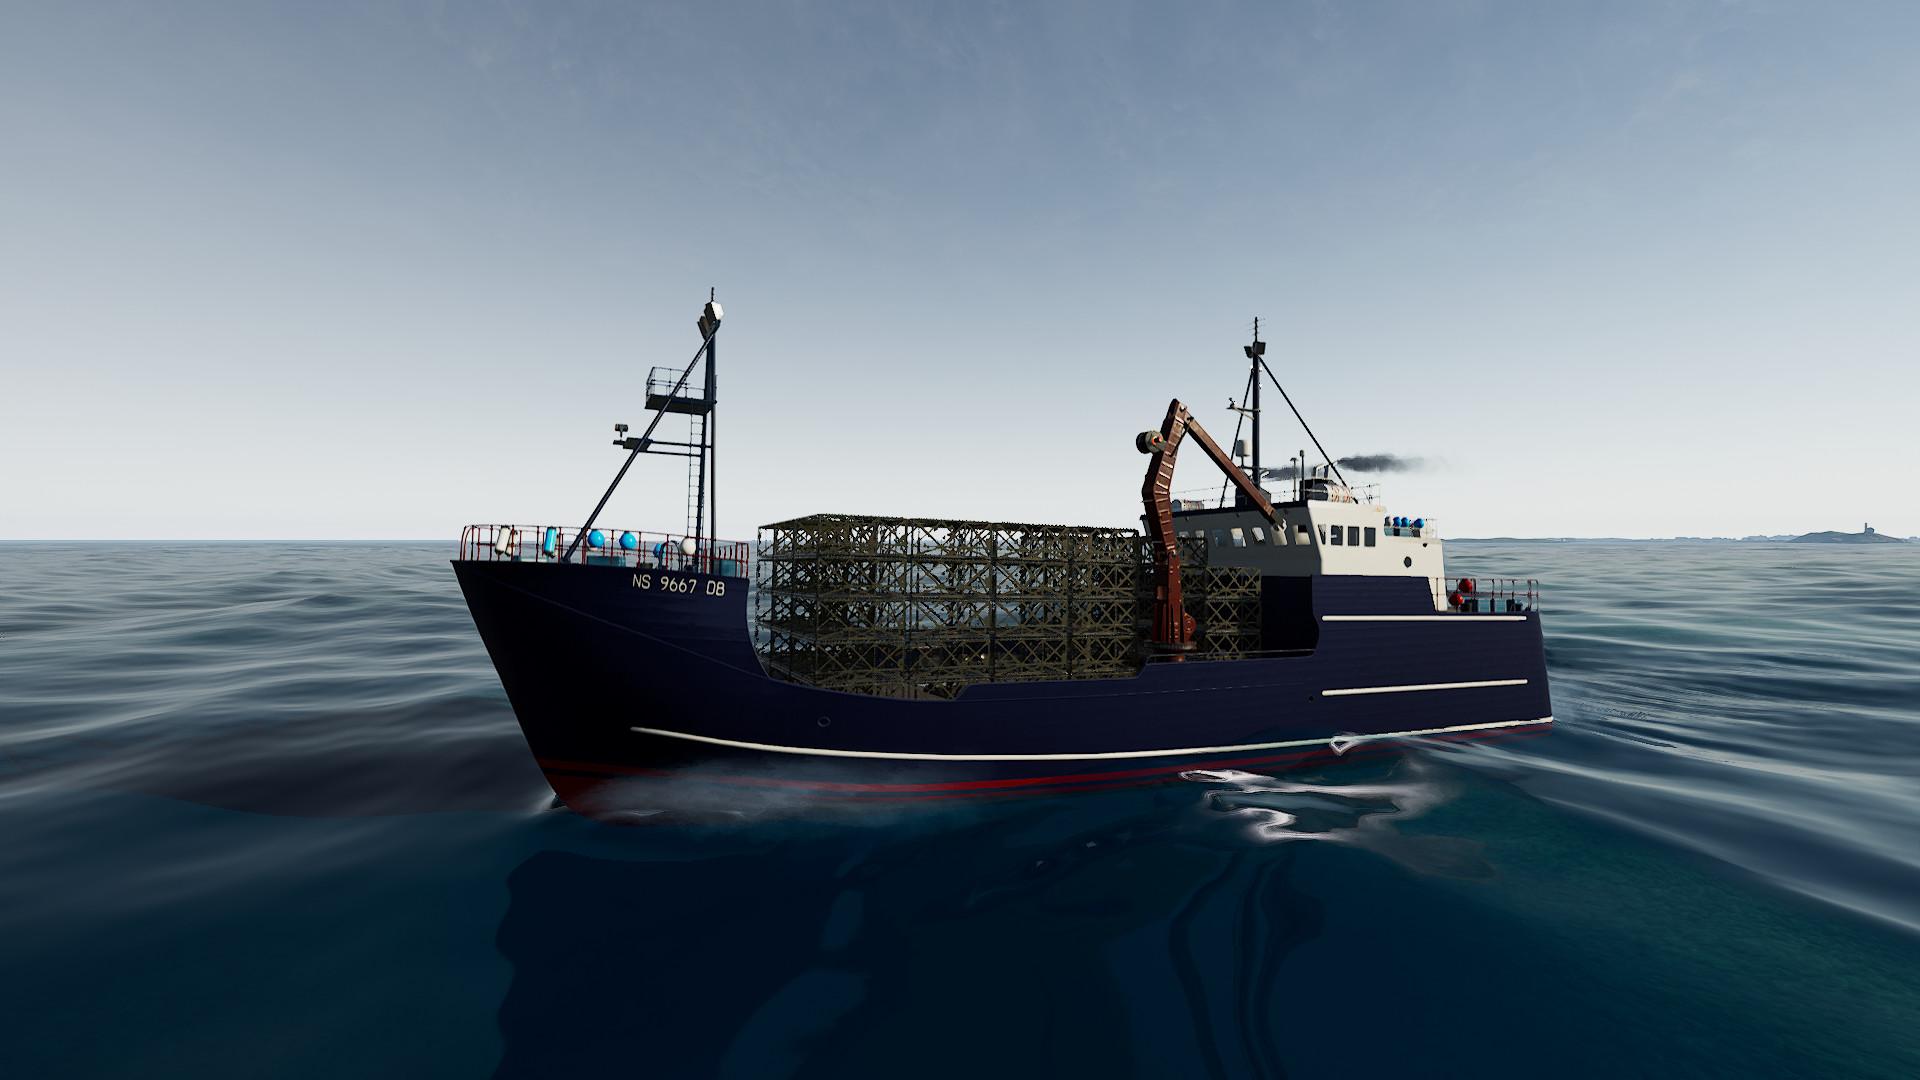 Screenshot №28 from game Fishing: North Atlantic - Enhanced Edition